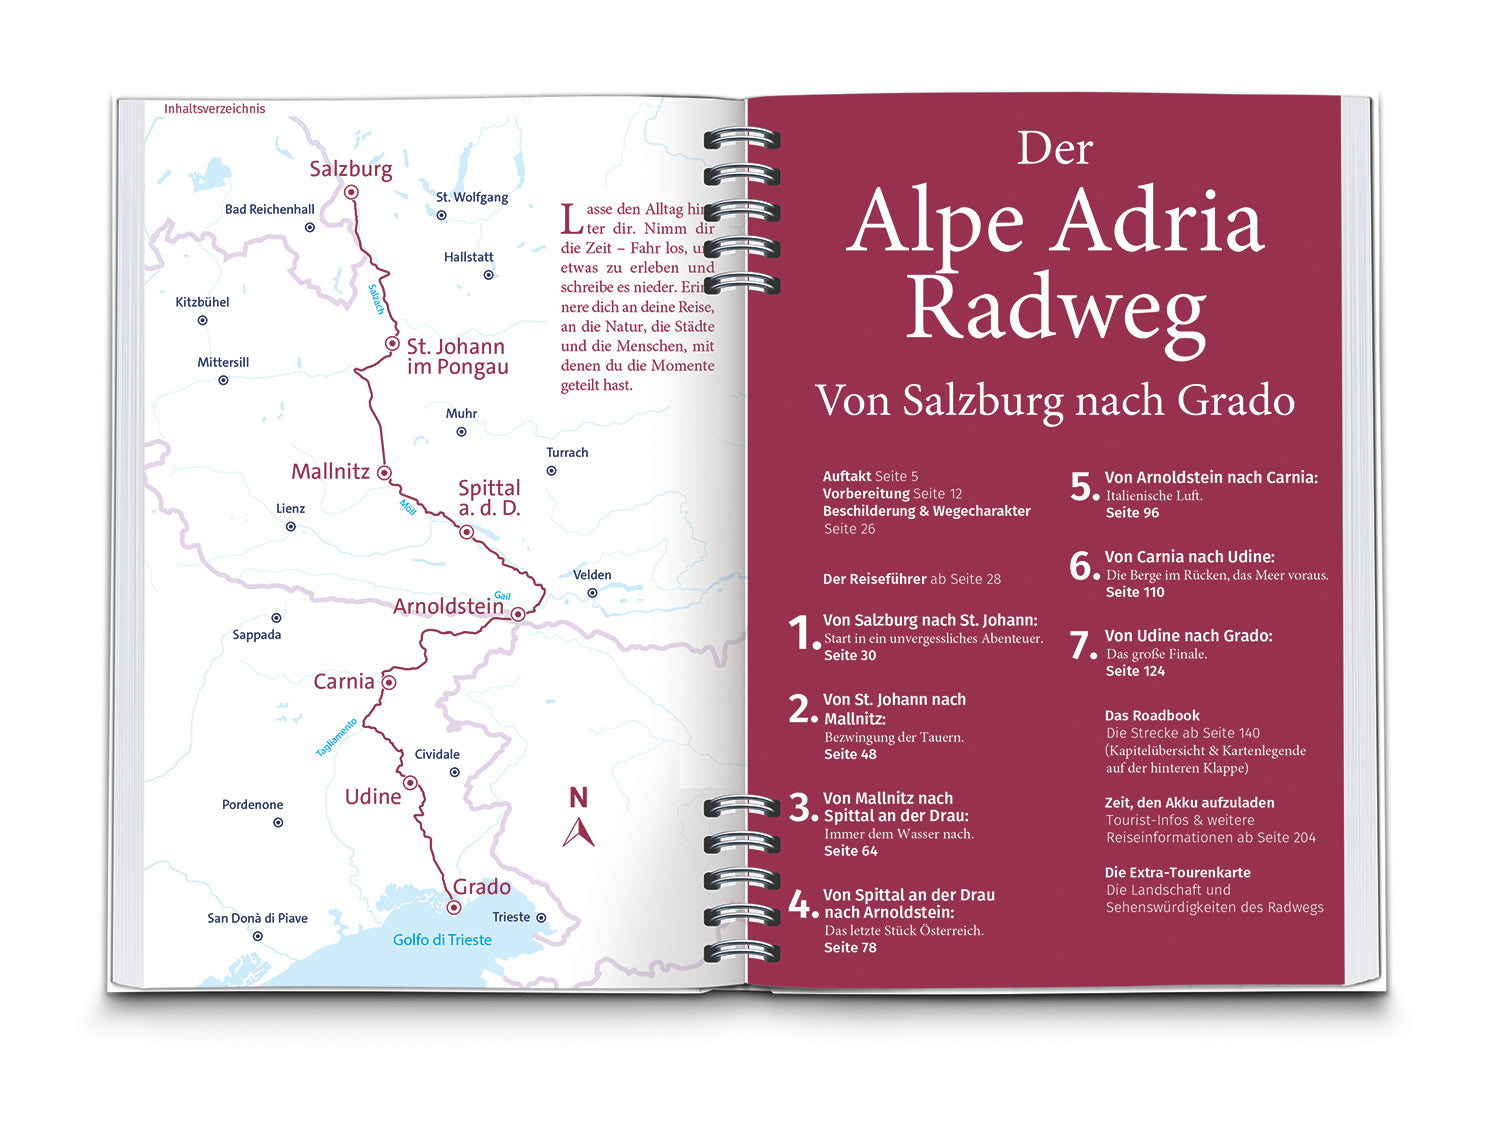 Alpe Adria Radweg - KOMPASS Radreiseführer